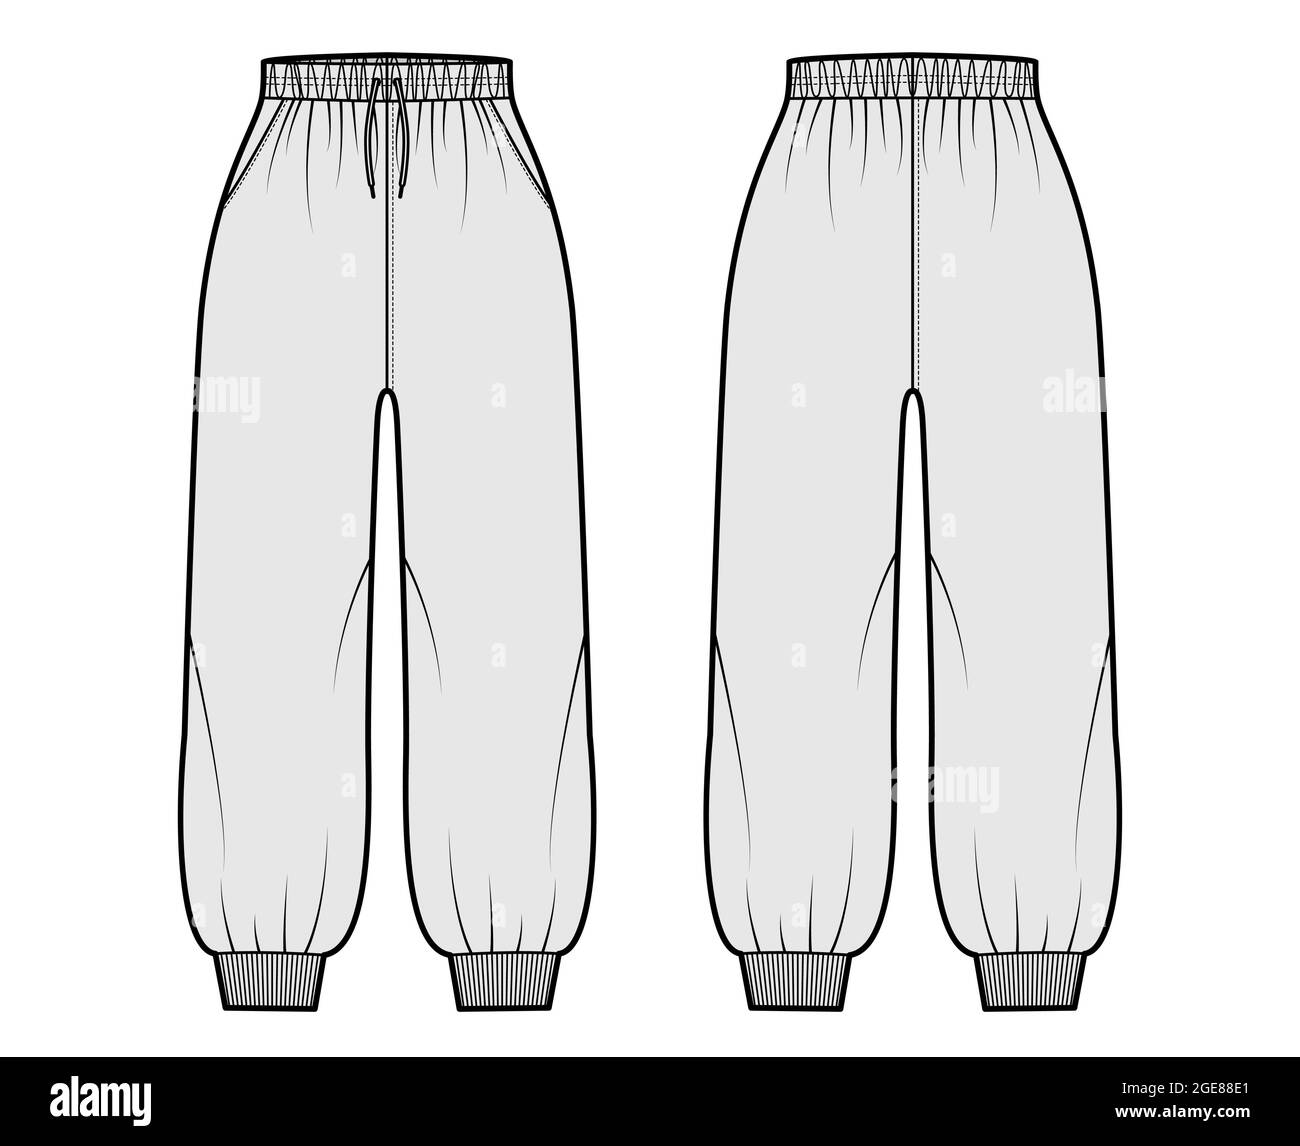 Shorts Sweatpants technical fashion illustration with elastic cuffs ...